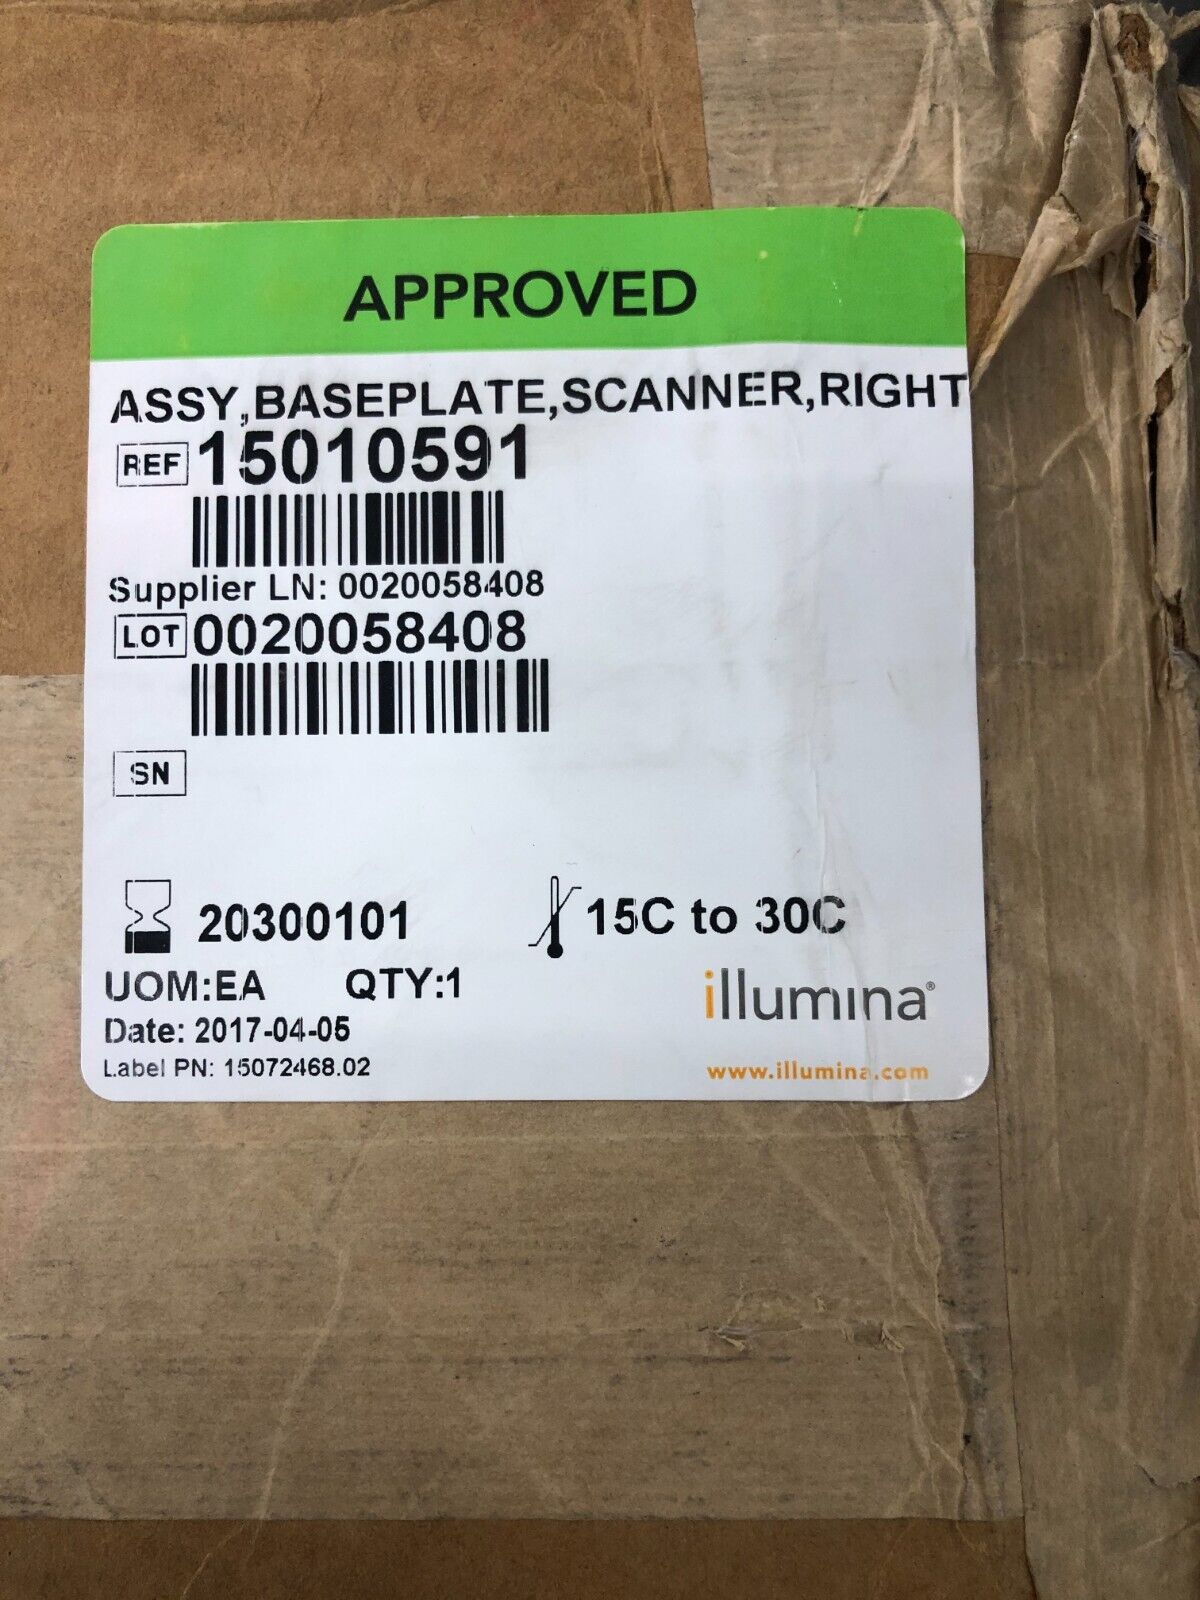 Illumina Scanner Baseplate Right Assembly Assy 15010591